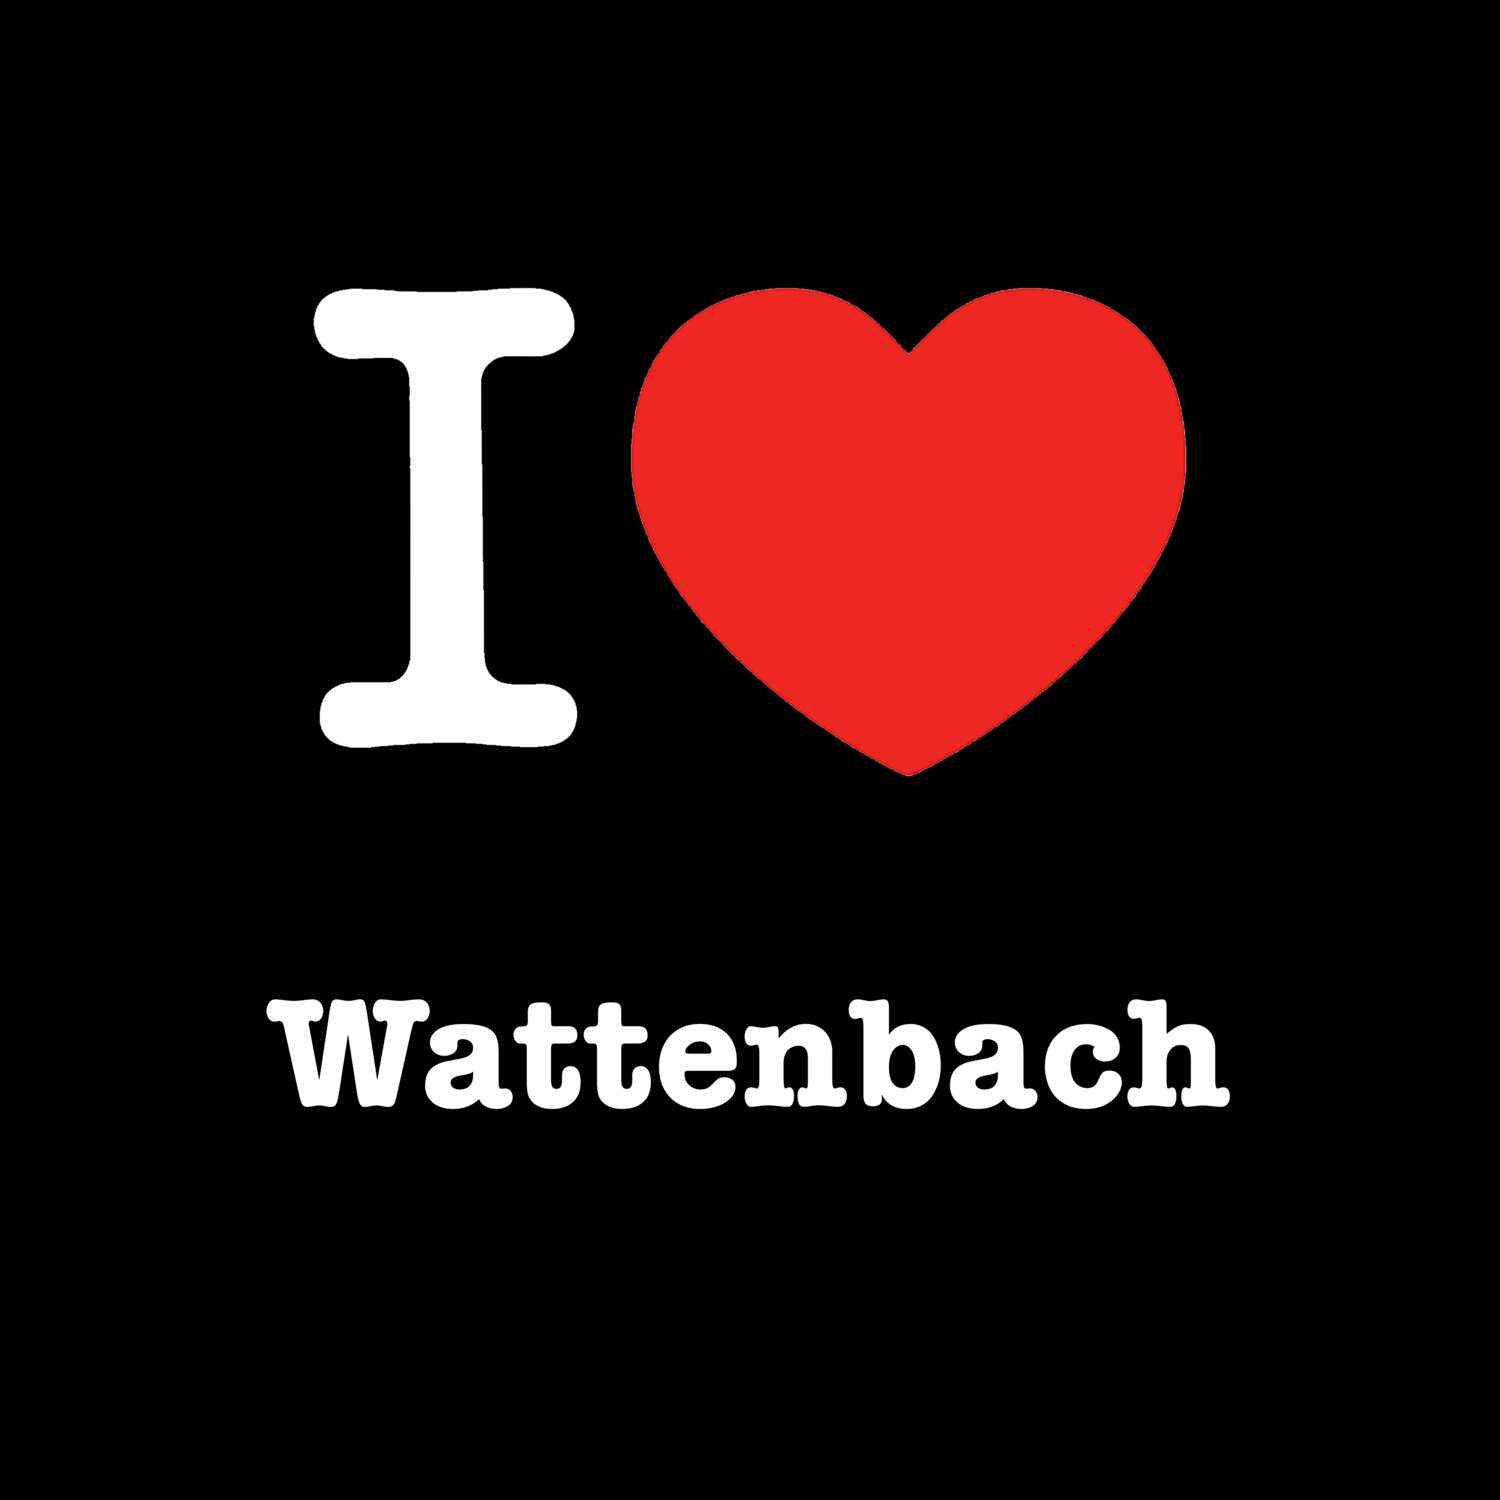 Wattenbach T-Shirt »I love«